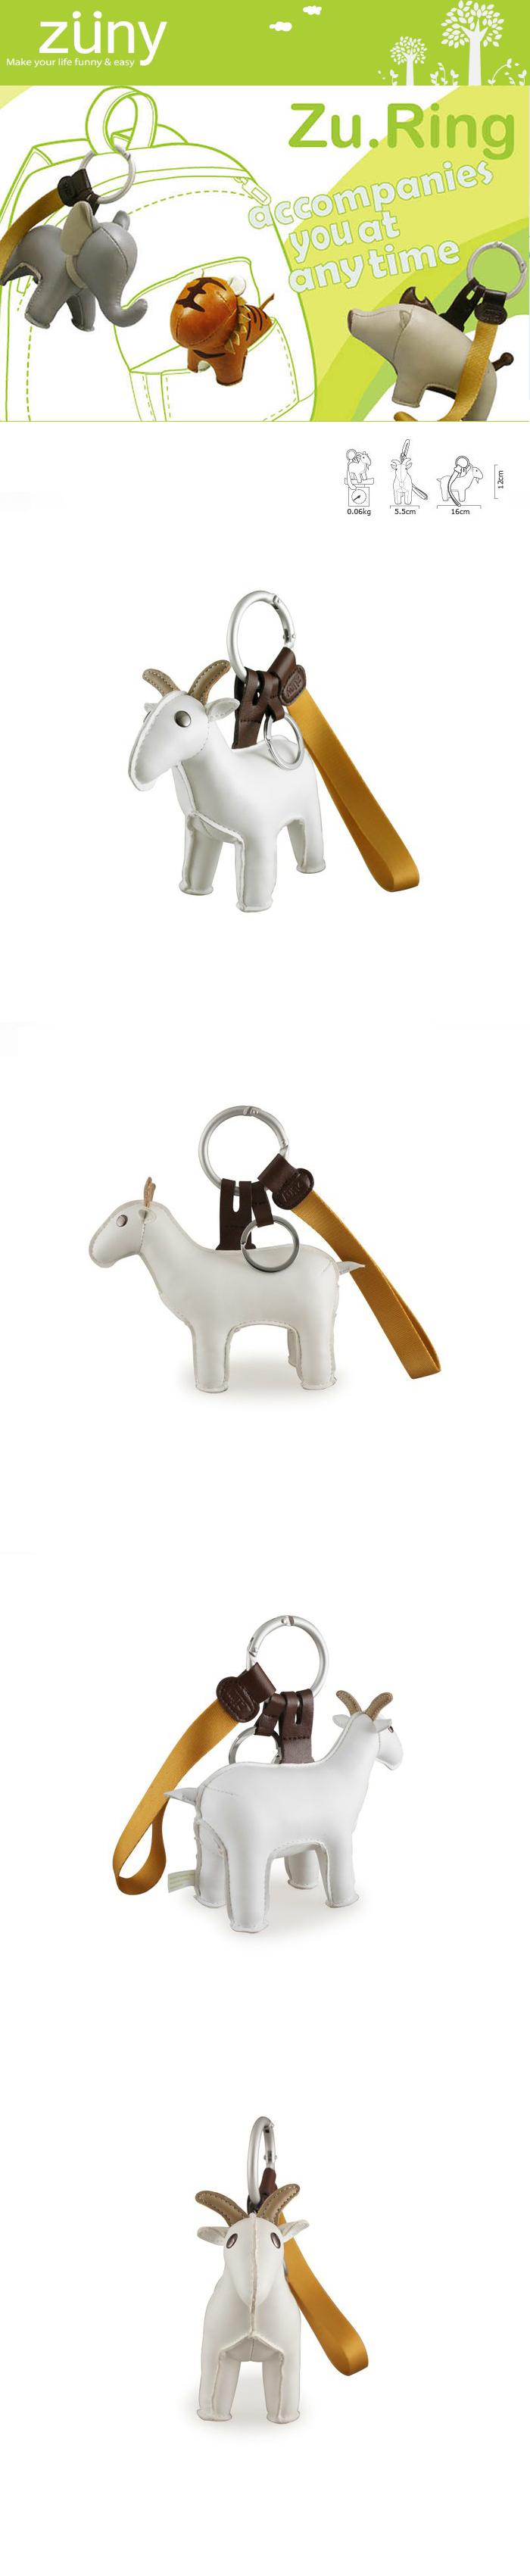 Zuny Classic 山羊造型擺飾吊飾 (白色)